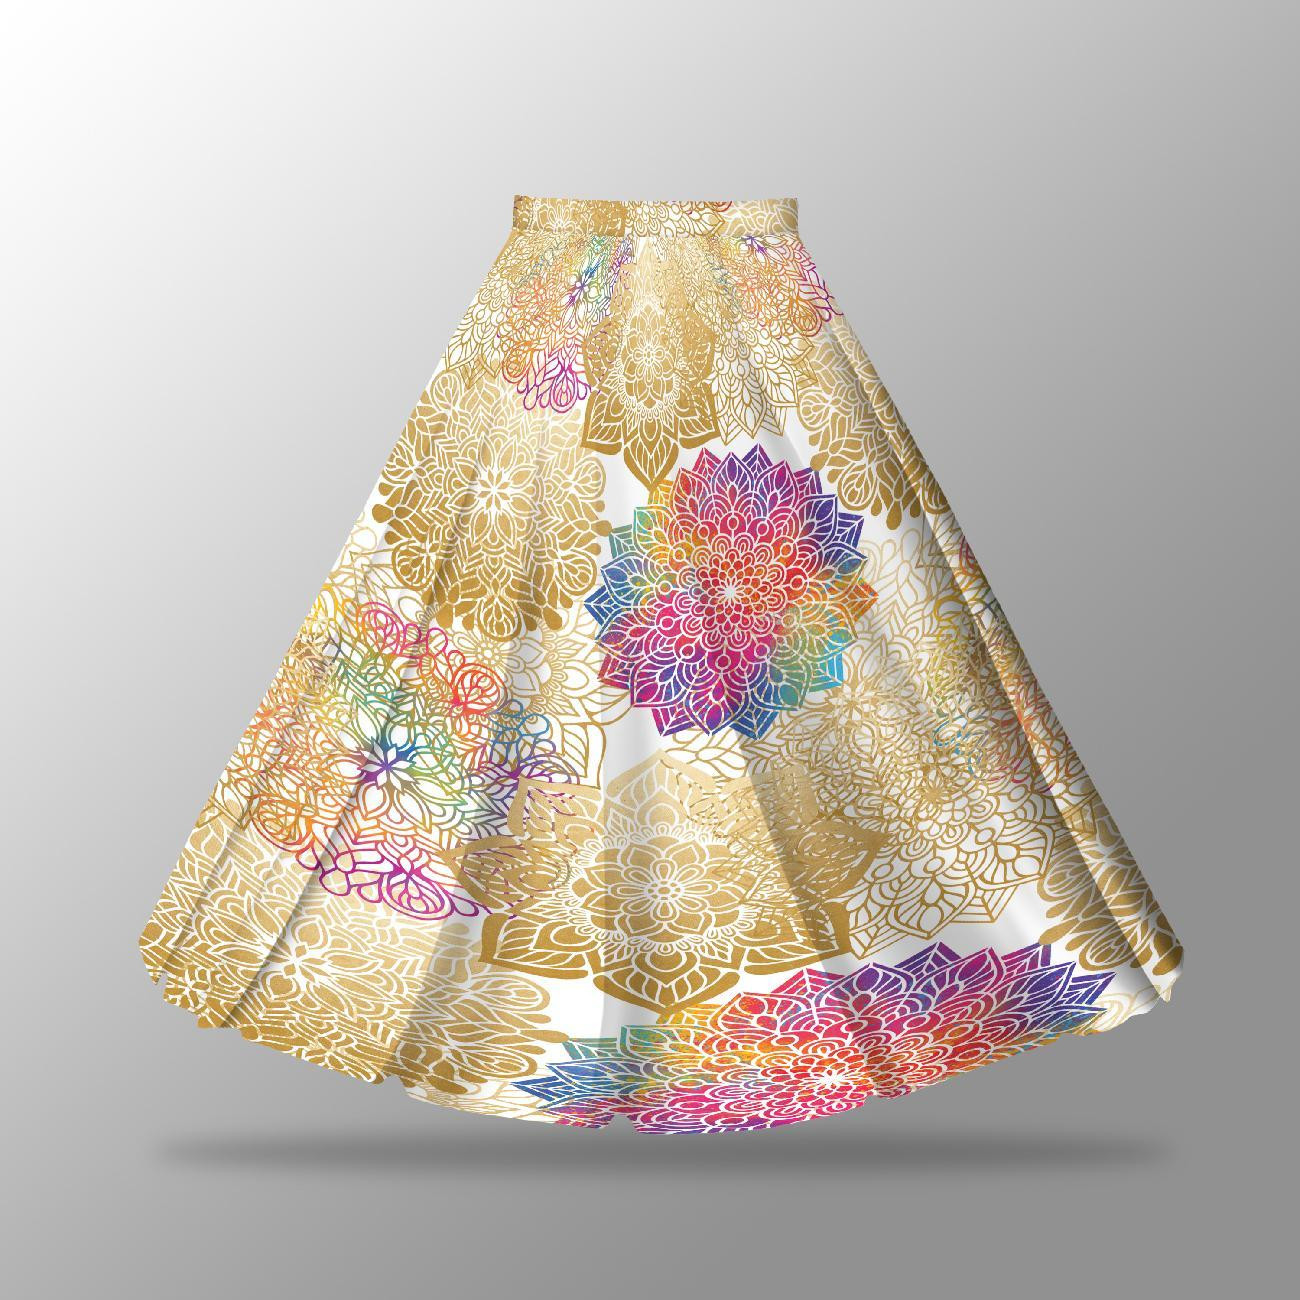 MANDALA pat. 3 - skirt panel "MAXI" - single jersey